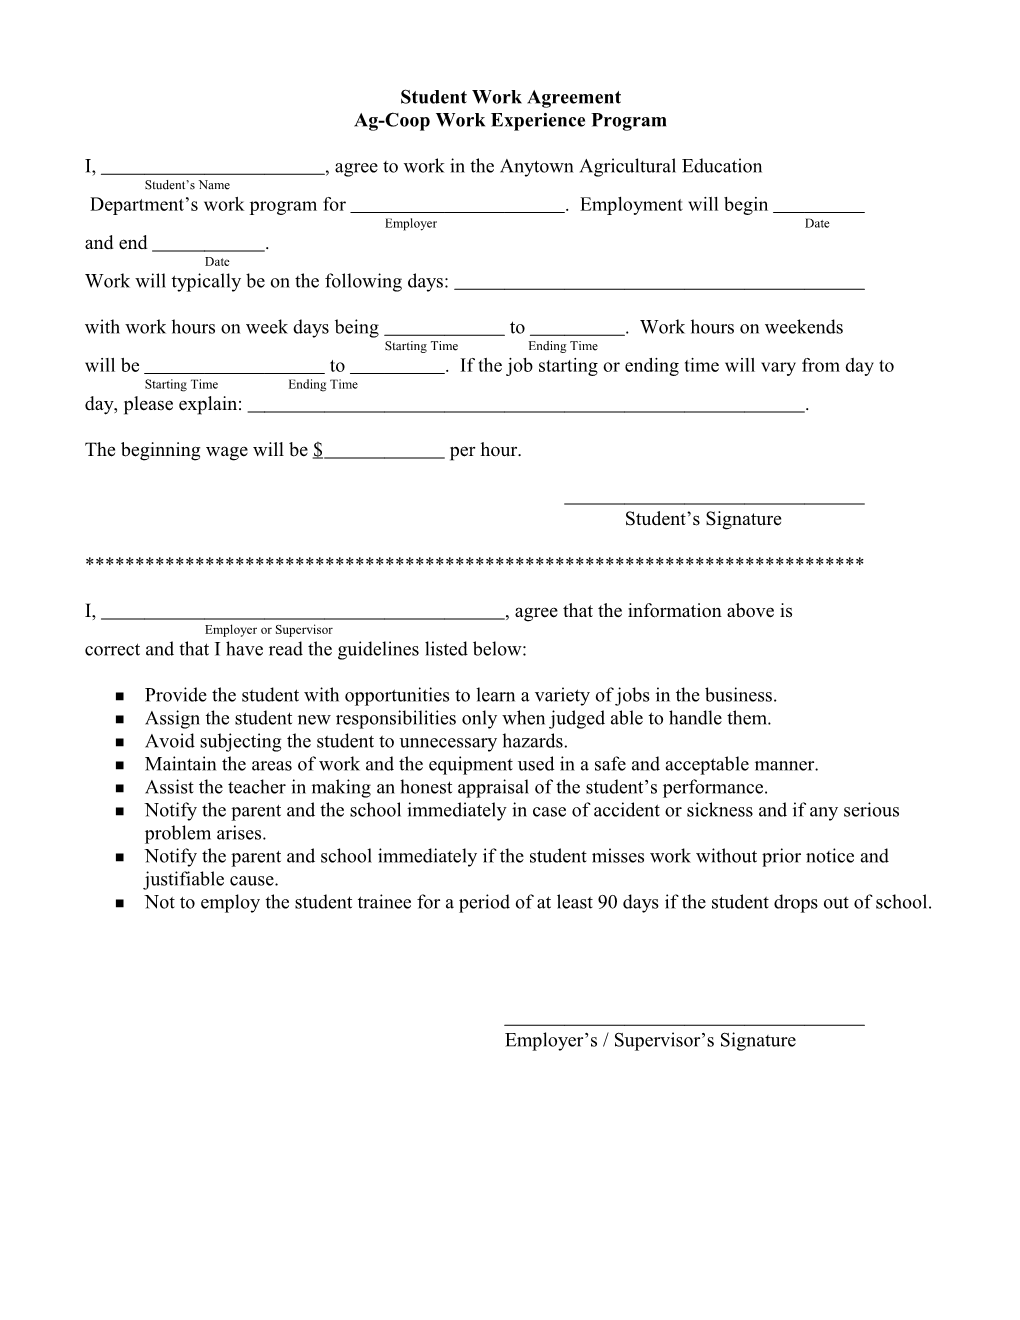 Student Work Agreement